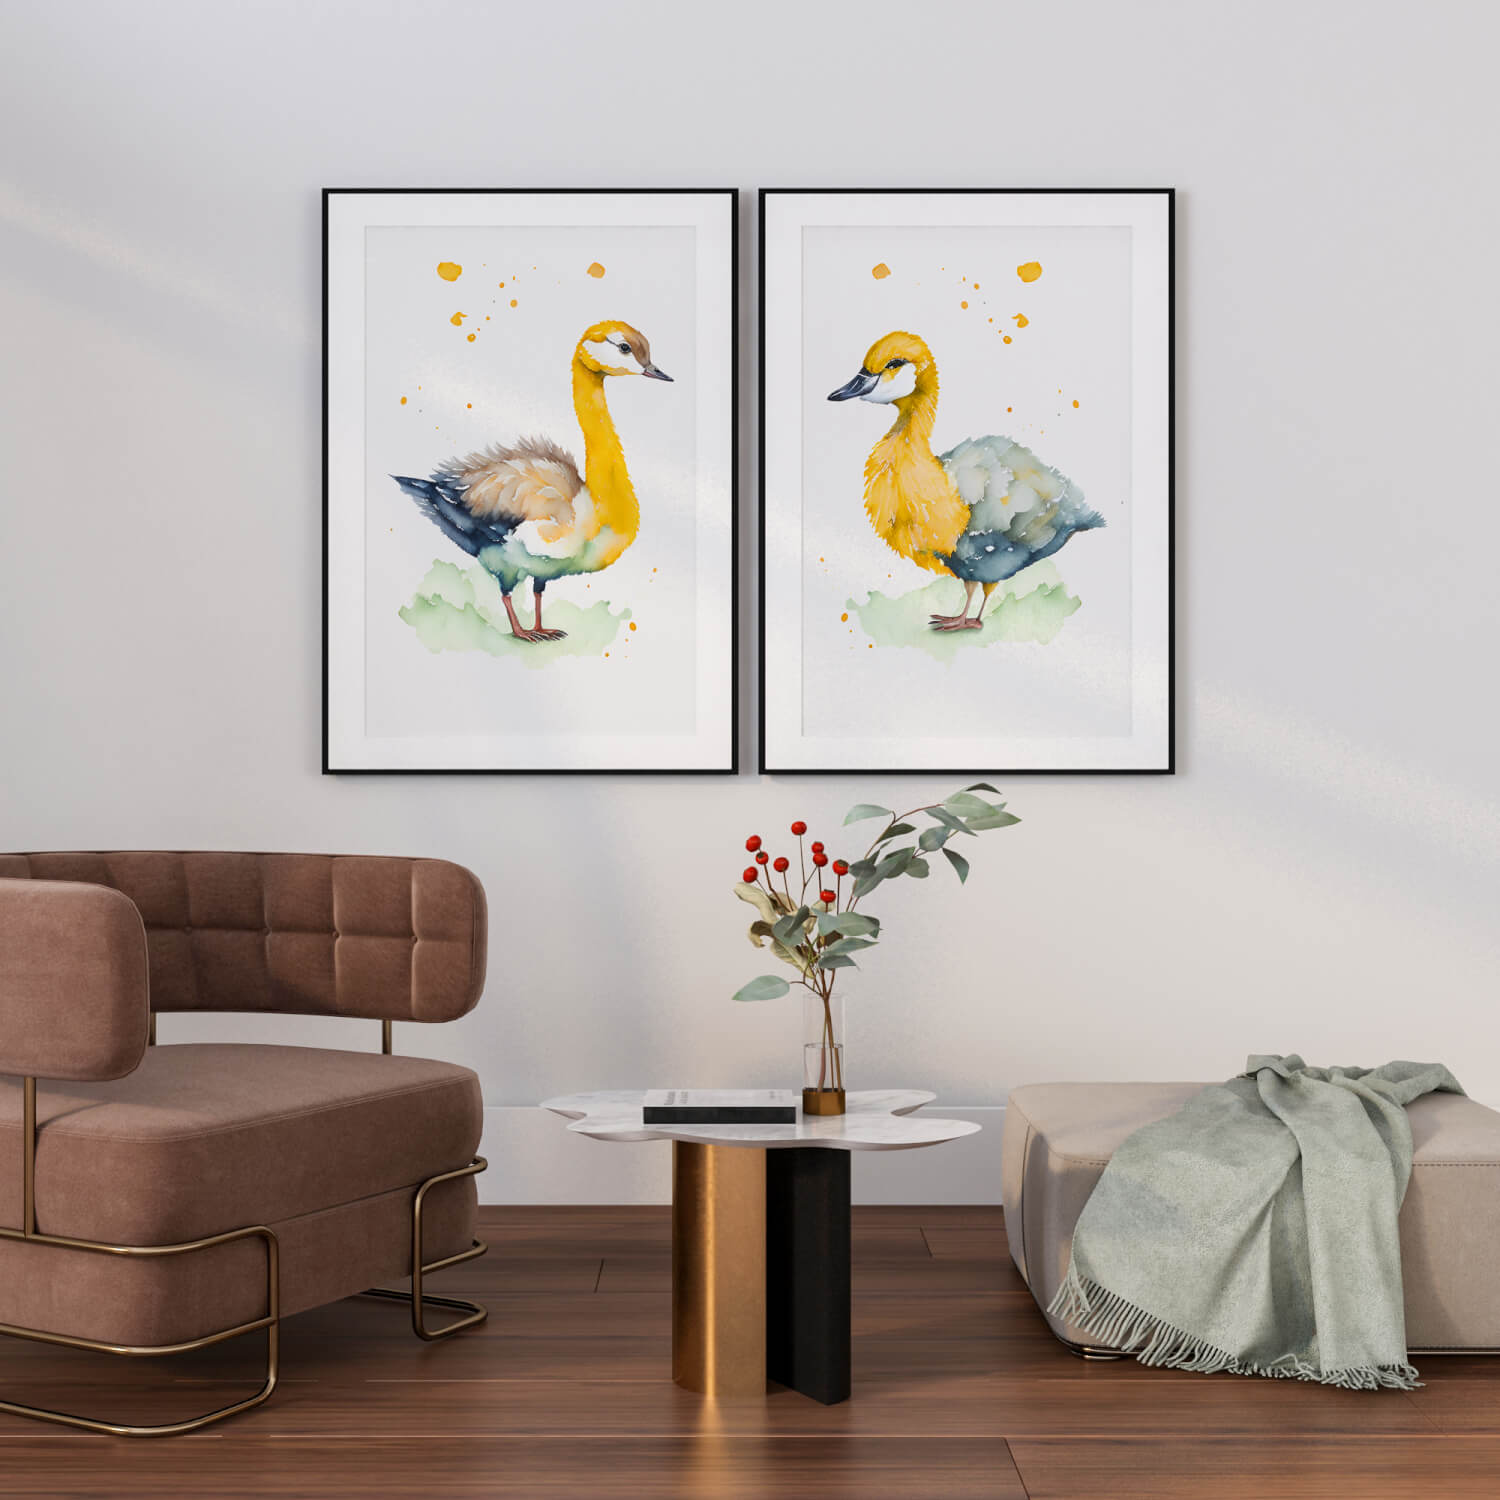 Vintage Donald Ducks - Wall Art Print Set Of 2